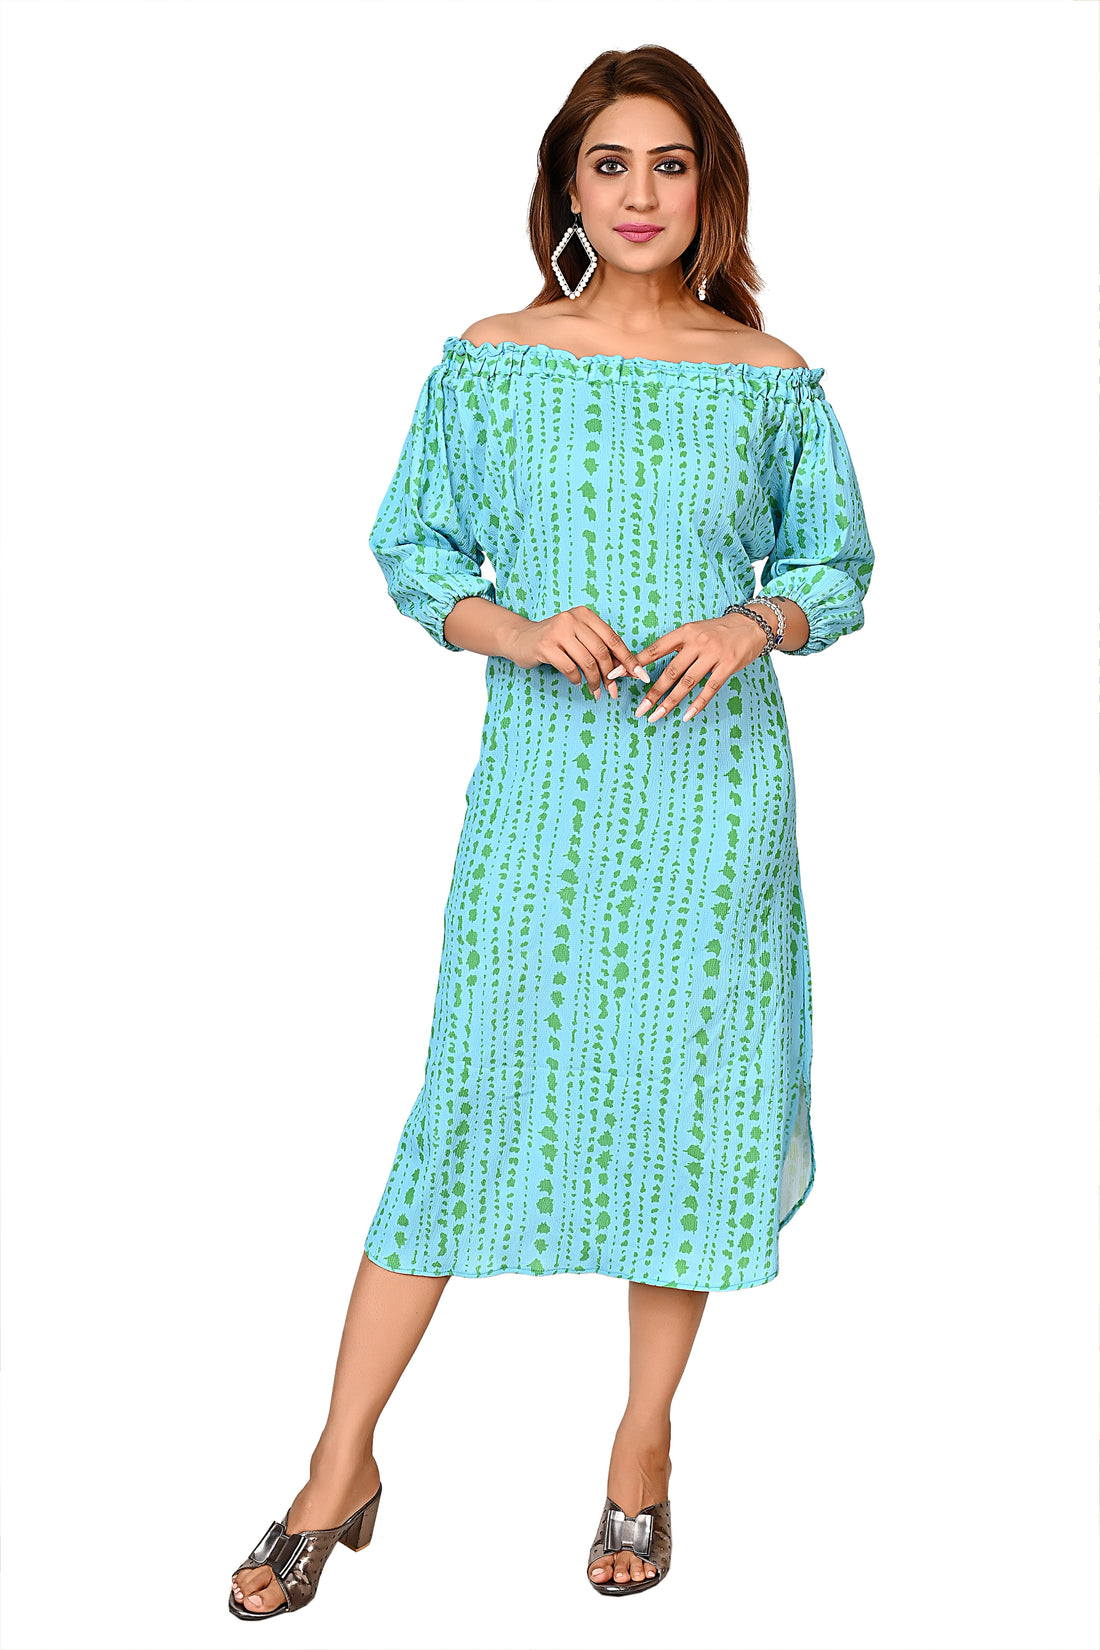 Nirmal online Premium Quality Off Shoulder Dress for Women in Aqua Blue Colour Print